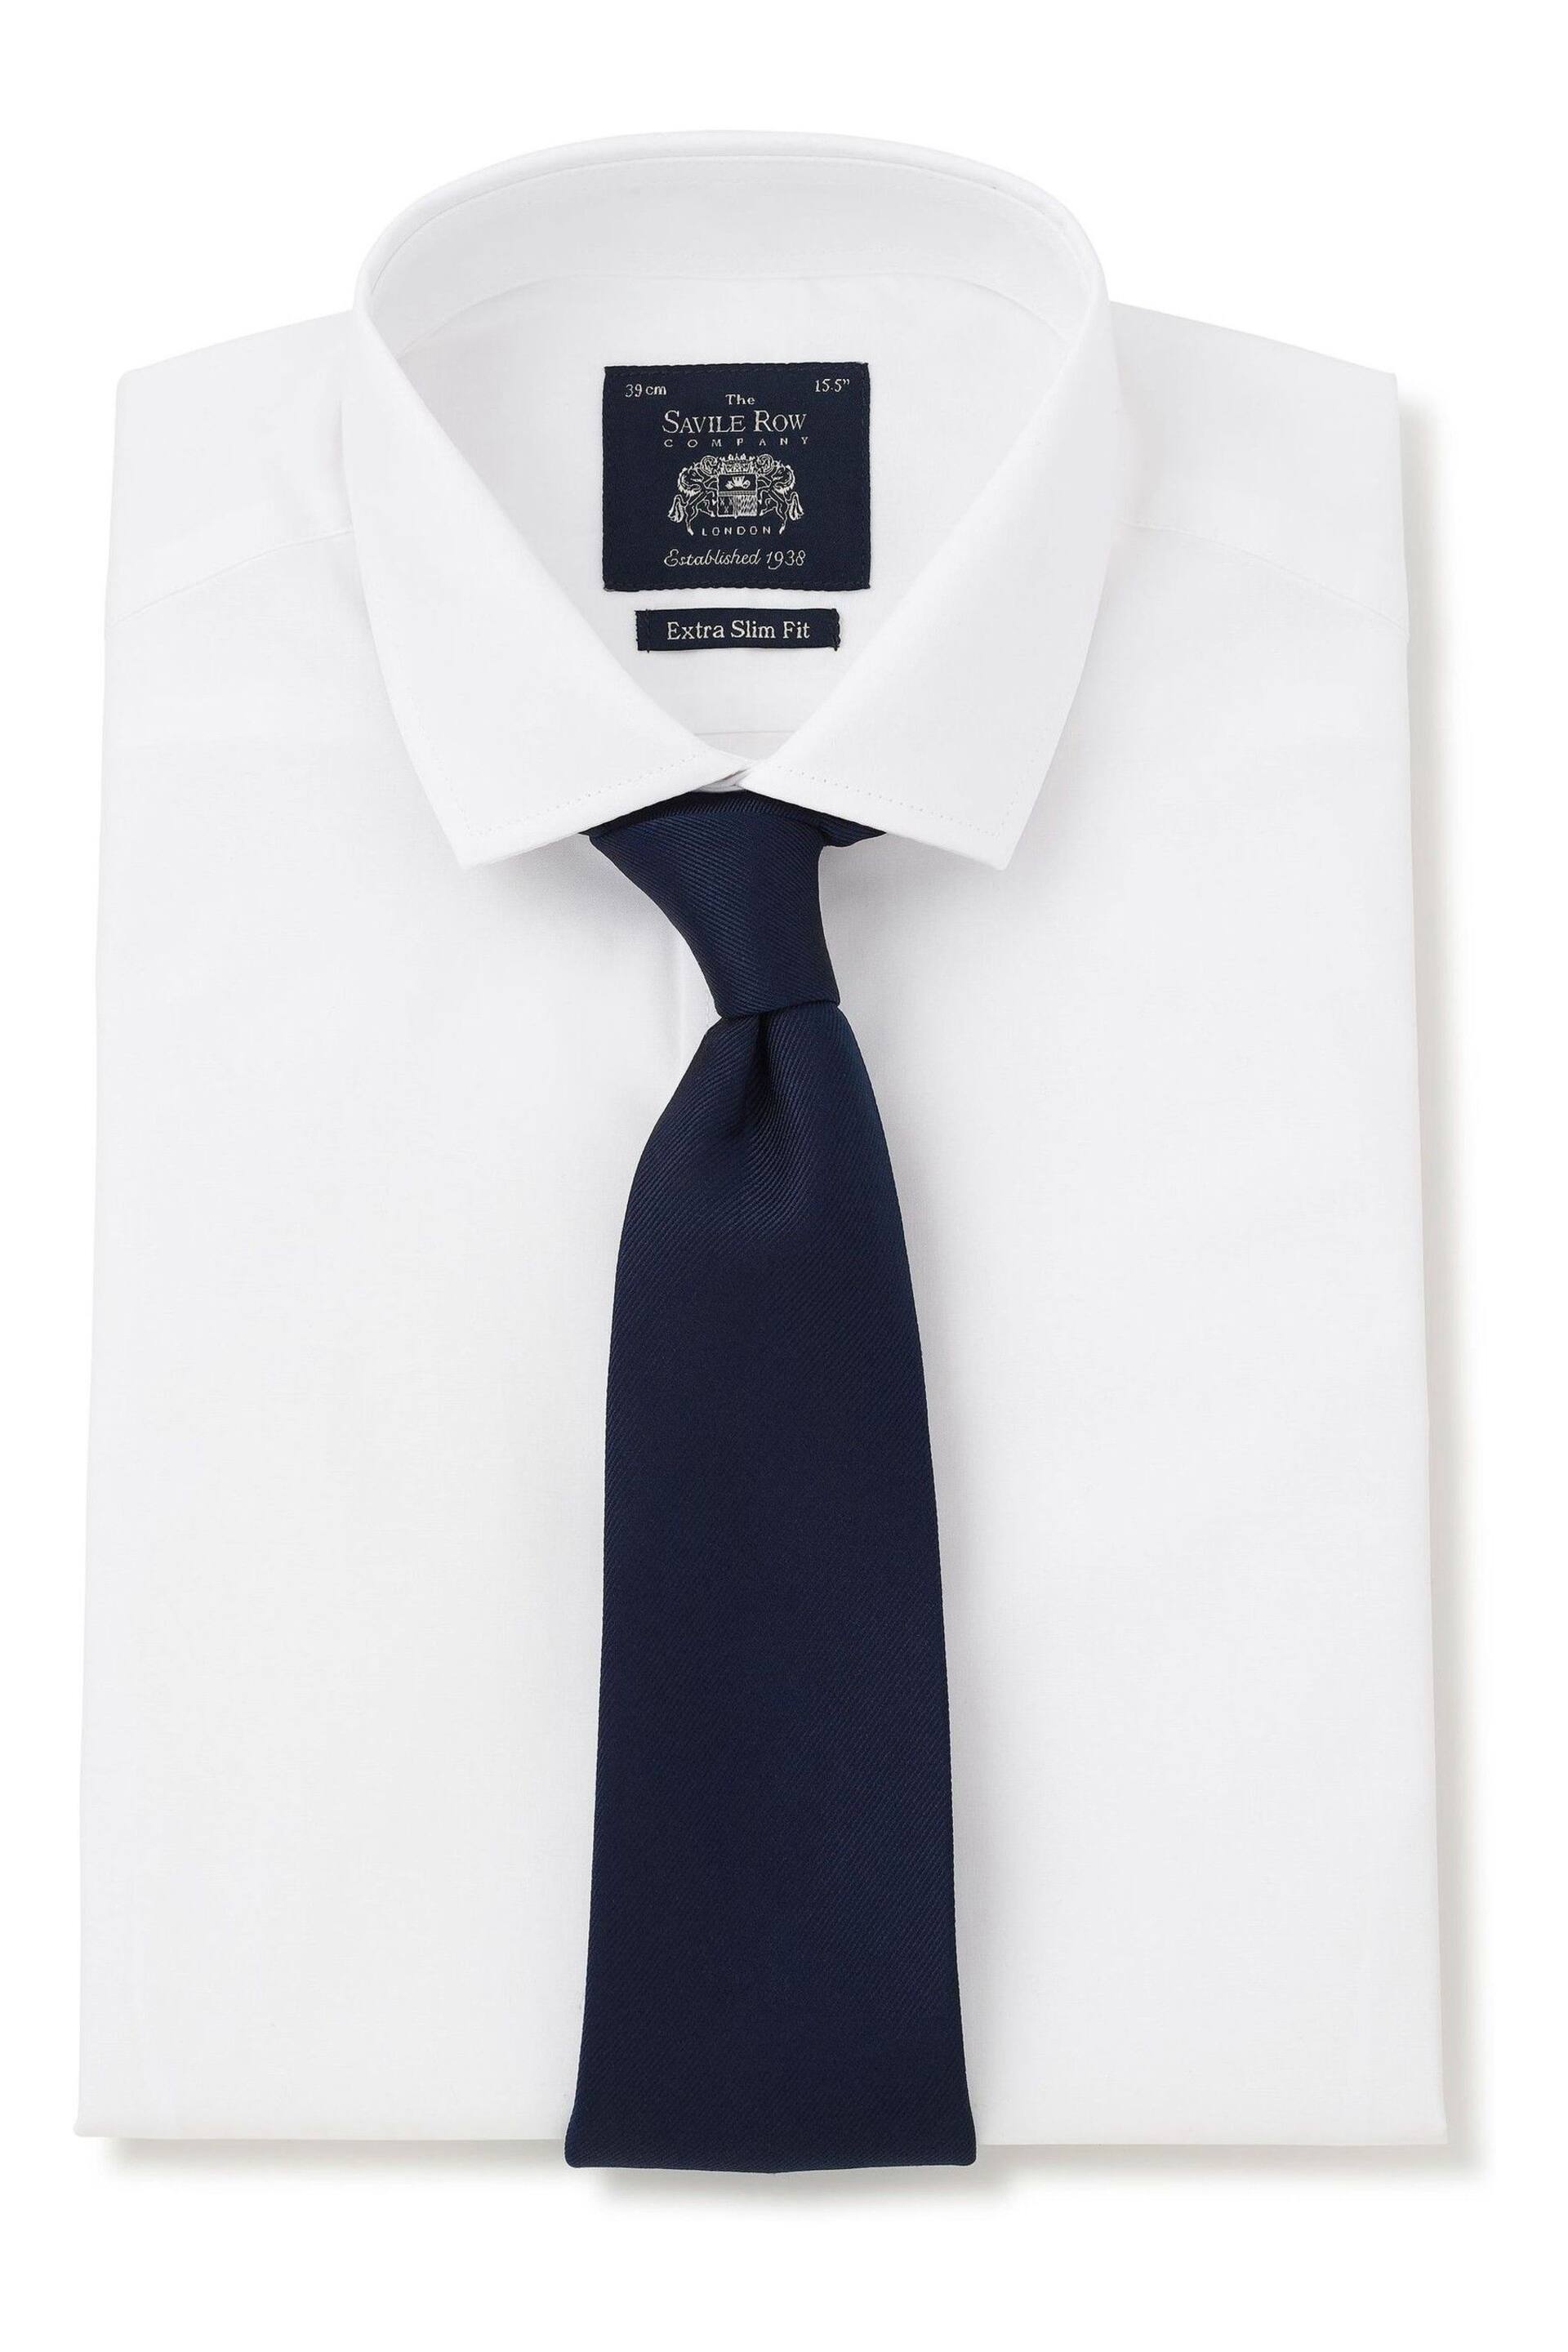 Savile Row Company Navy Fine Twill Skinny Silk Tie - Image 4 of 4